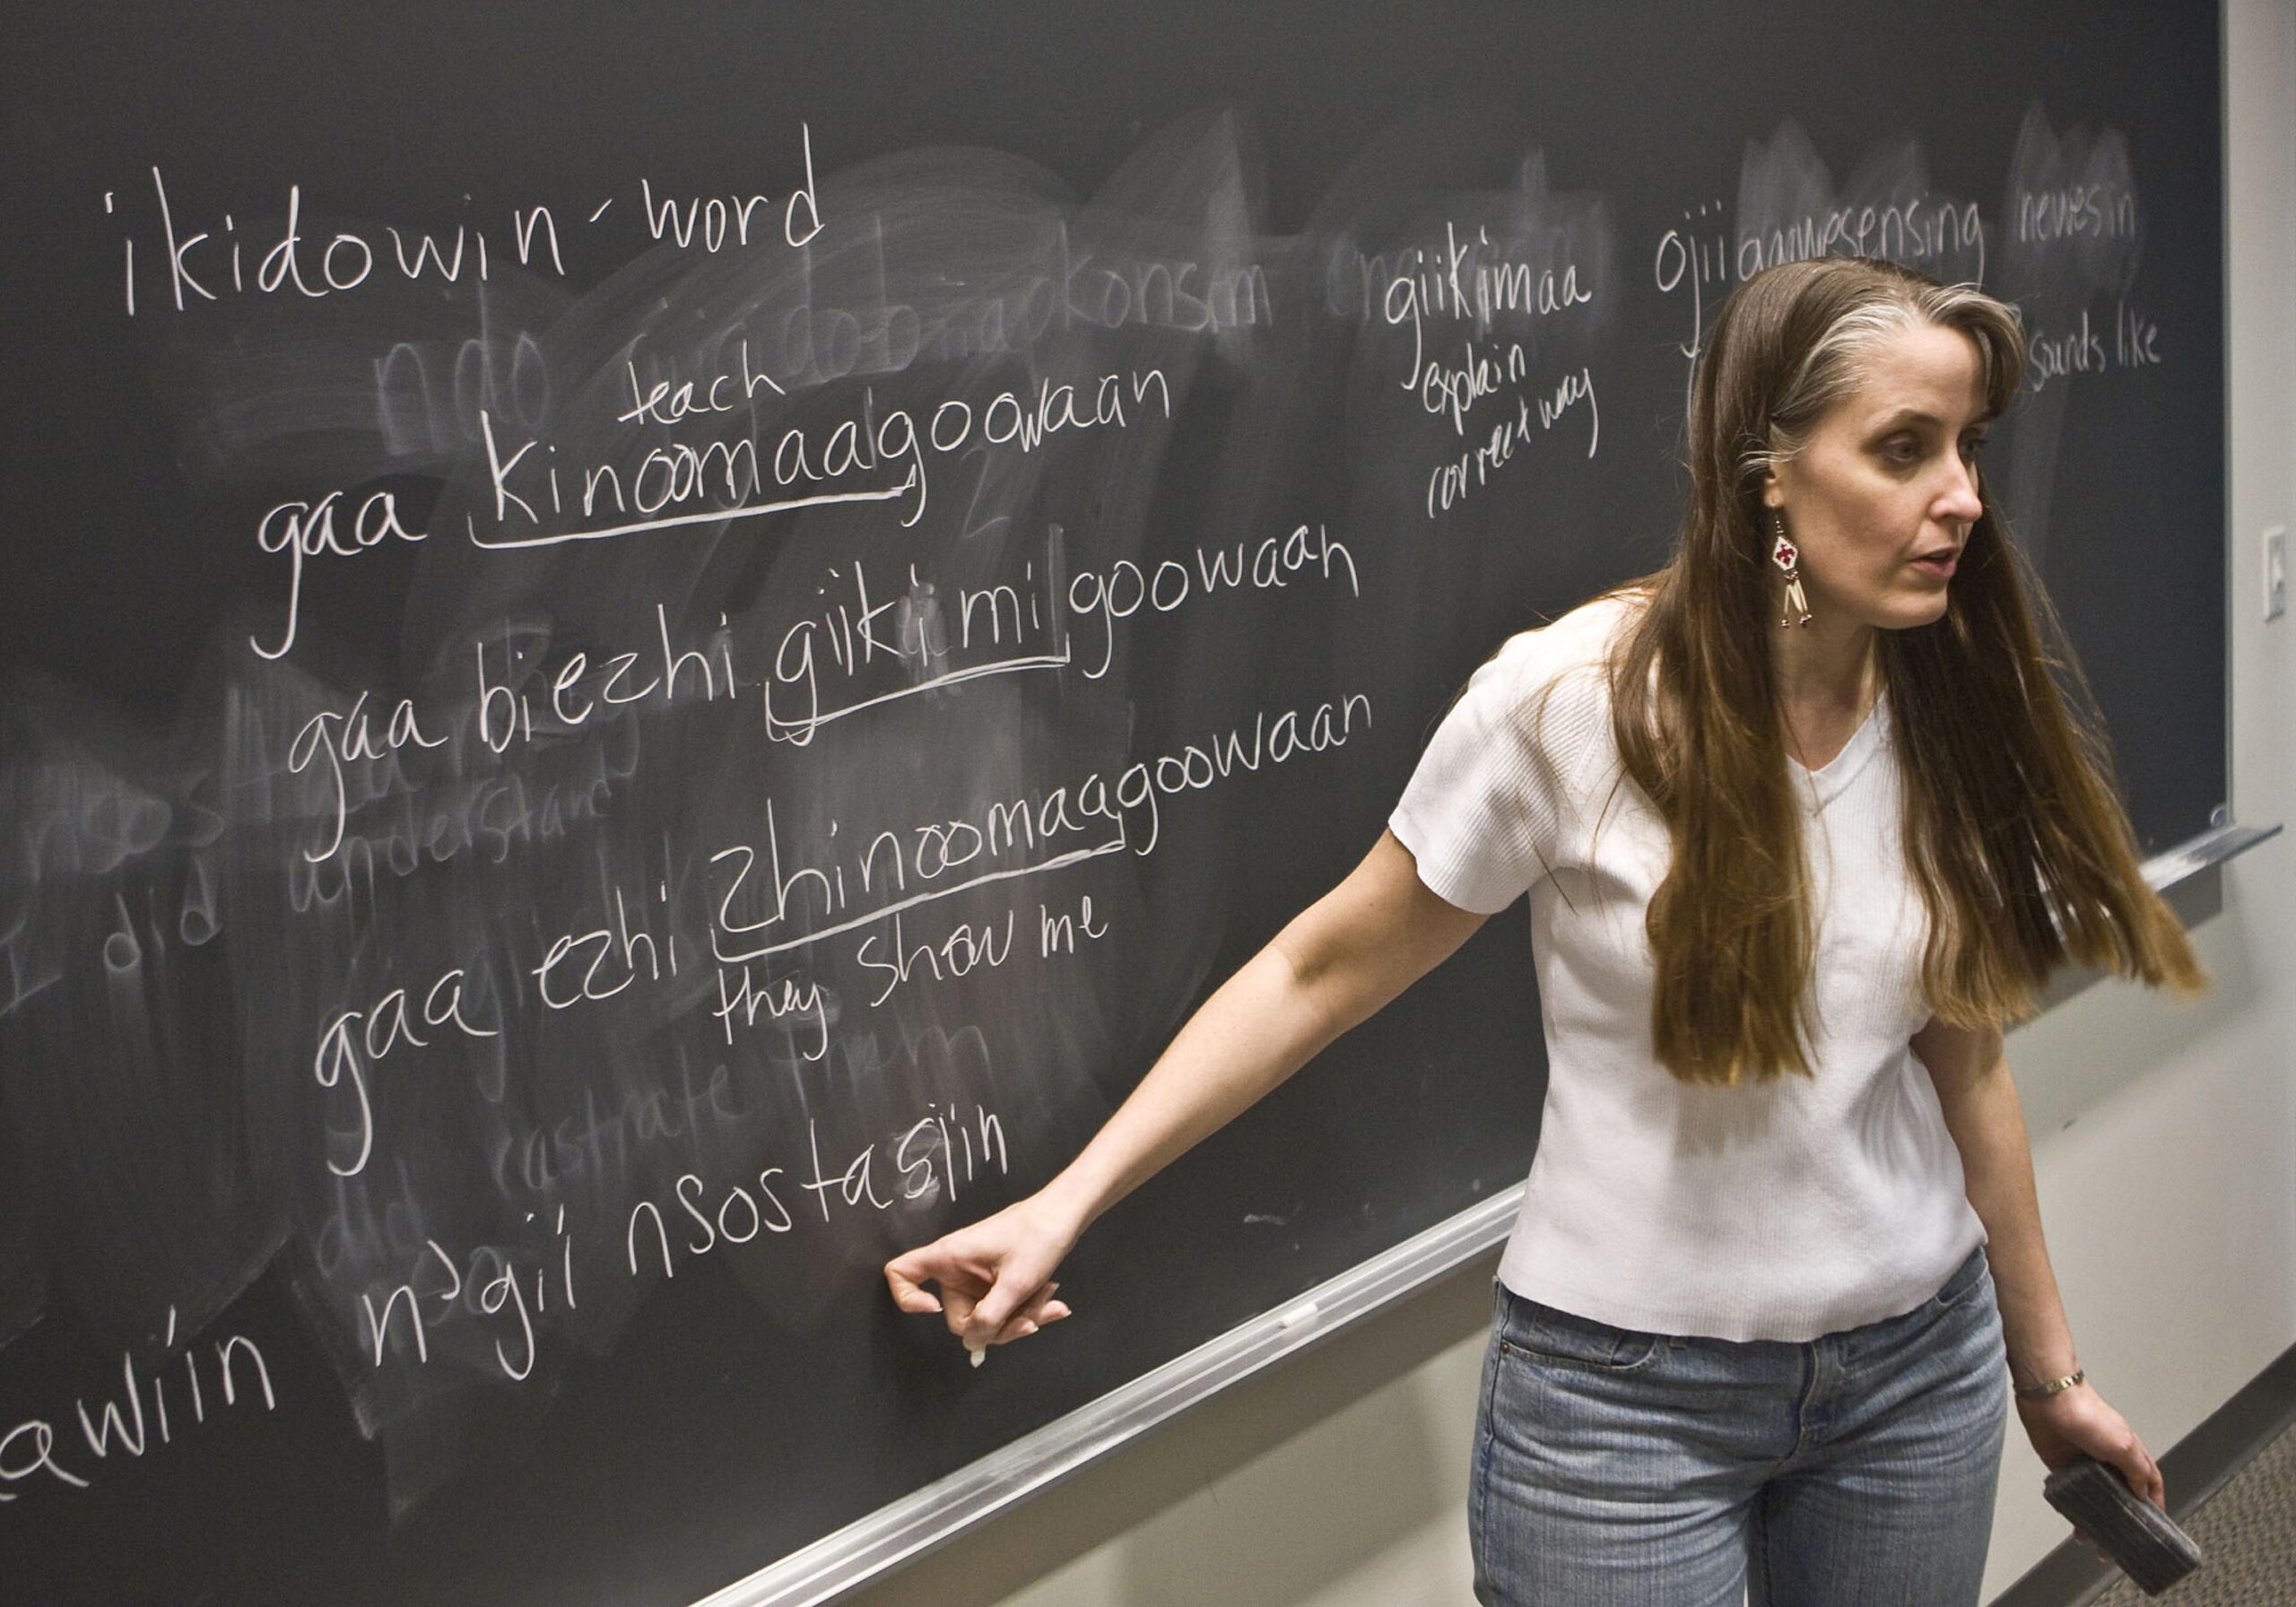 University of Michigan lecturer Margaret Noori leads a weekly Ojibwe language study group at the University of Michigan.